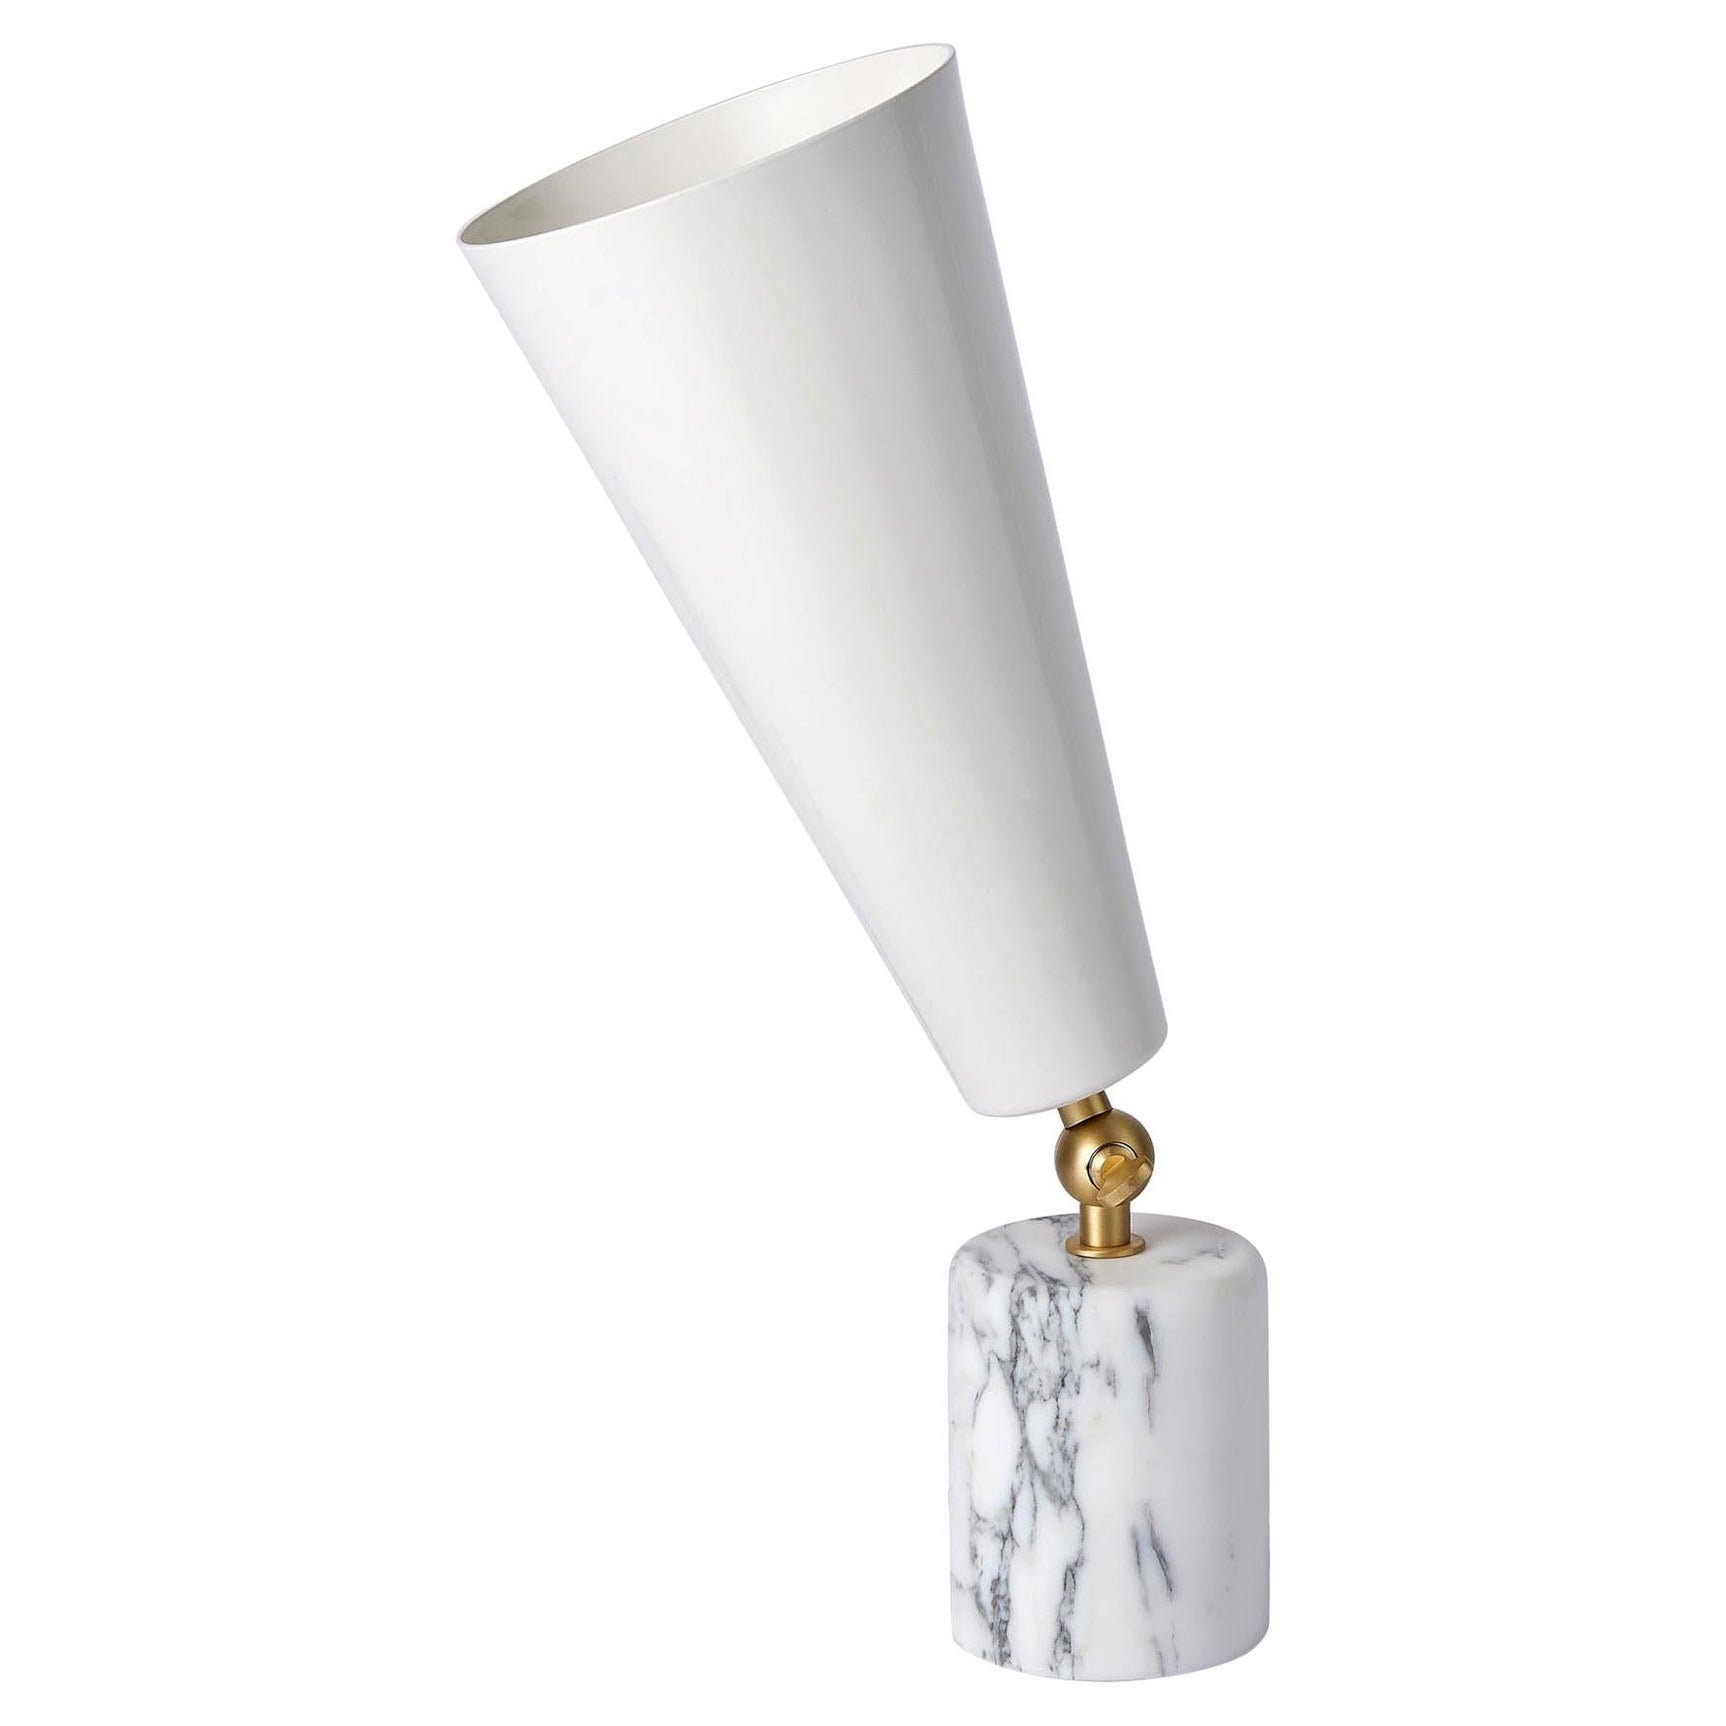 Tato Italia 'Vox' Table Lamp in White Carrara Marble, Satin Brass, and White